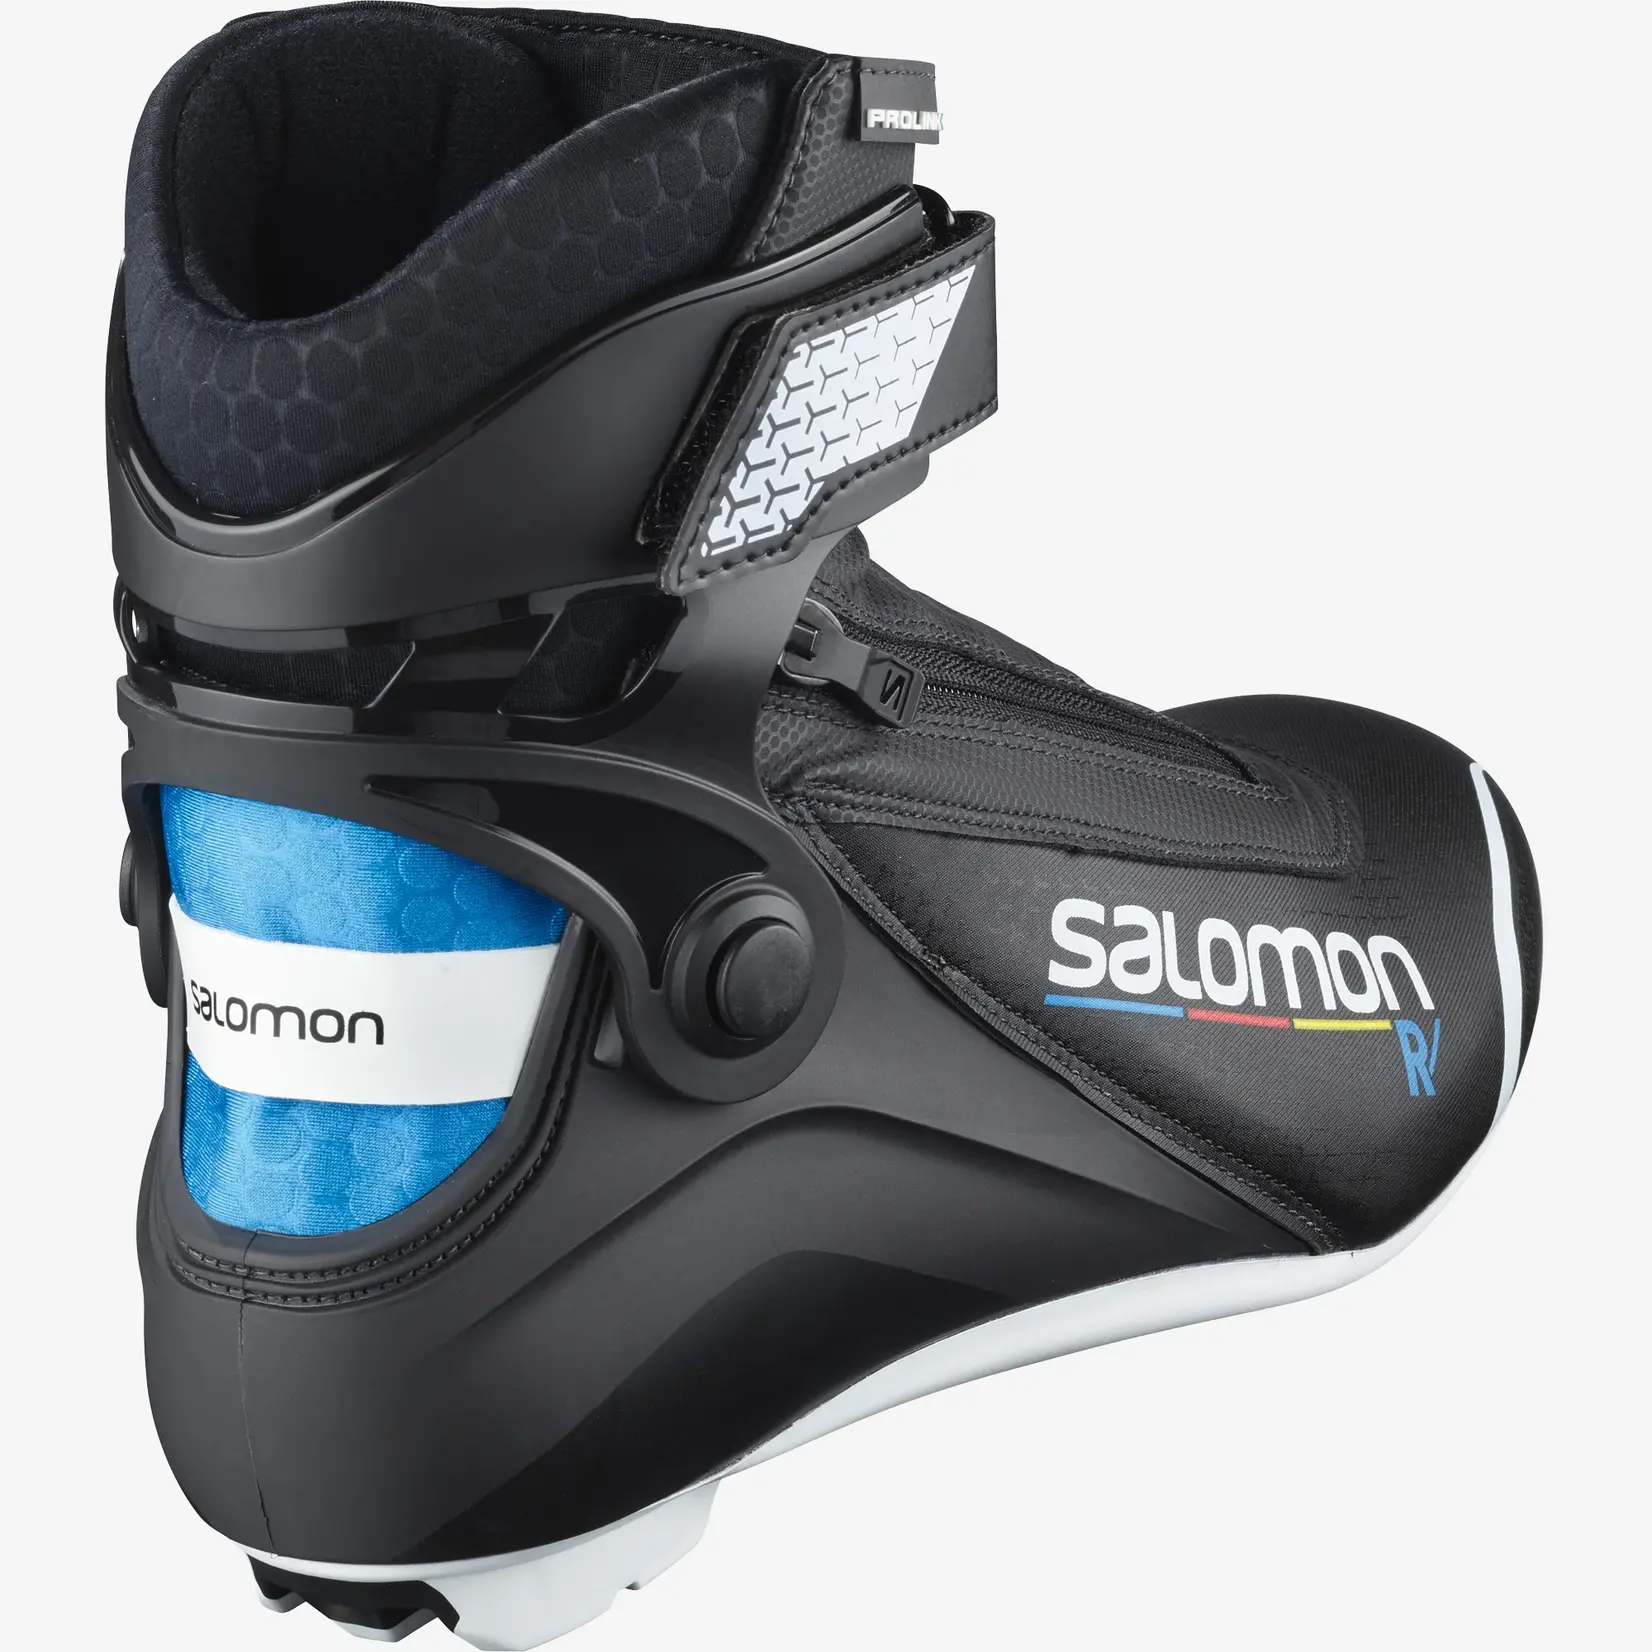 Salomon R/Prolink Combi Boot